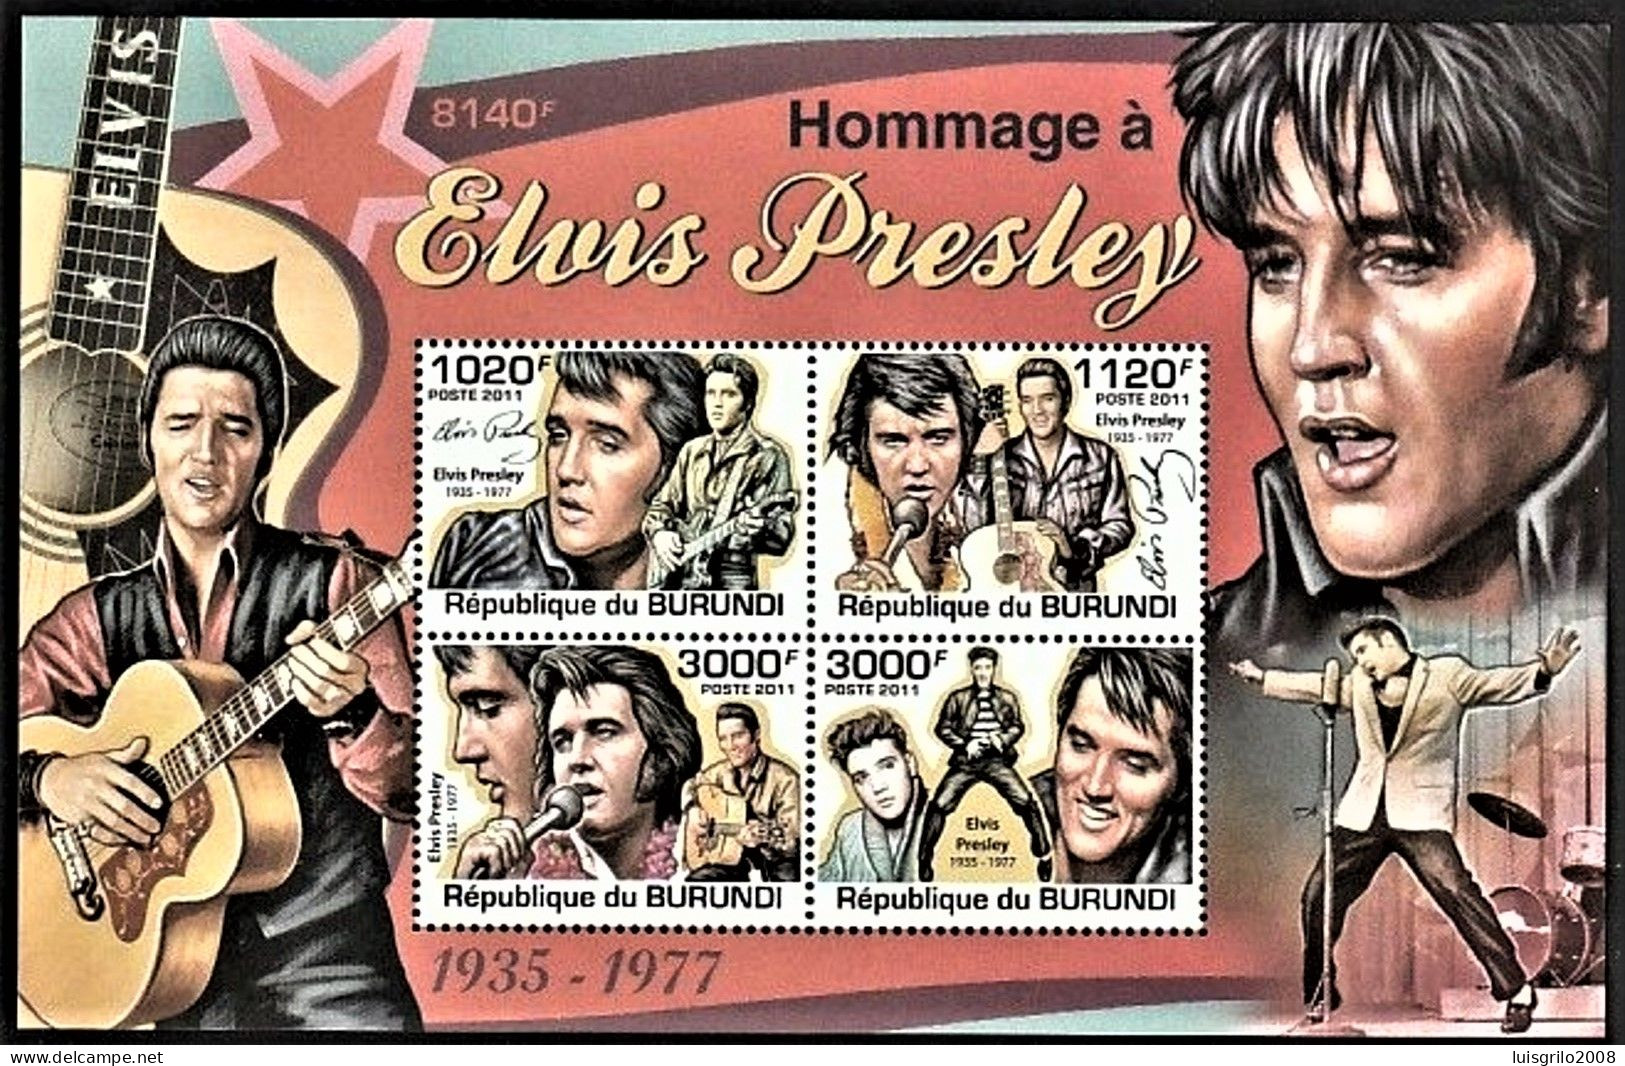 Hommage à Elvis Presley, 1935-1977 -|- Burundi, 2011 - MNH - Elvis Presley